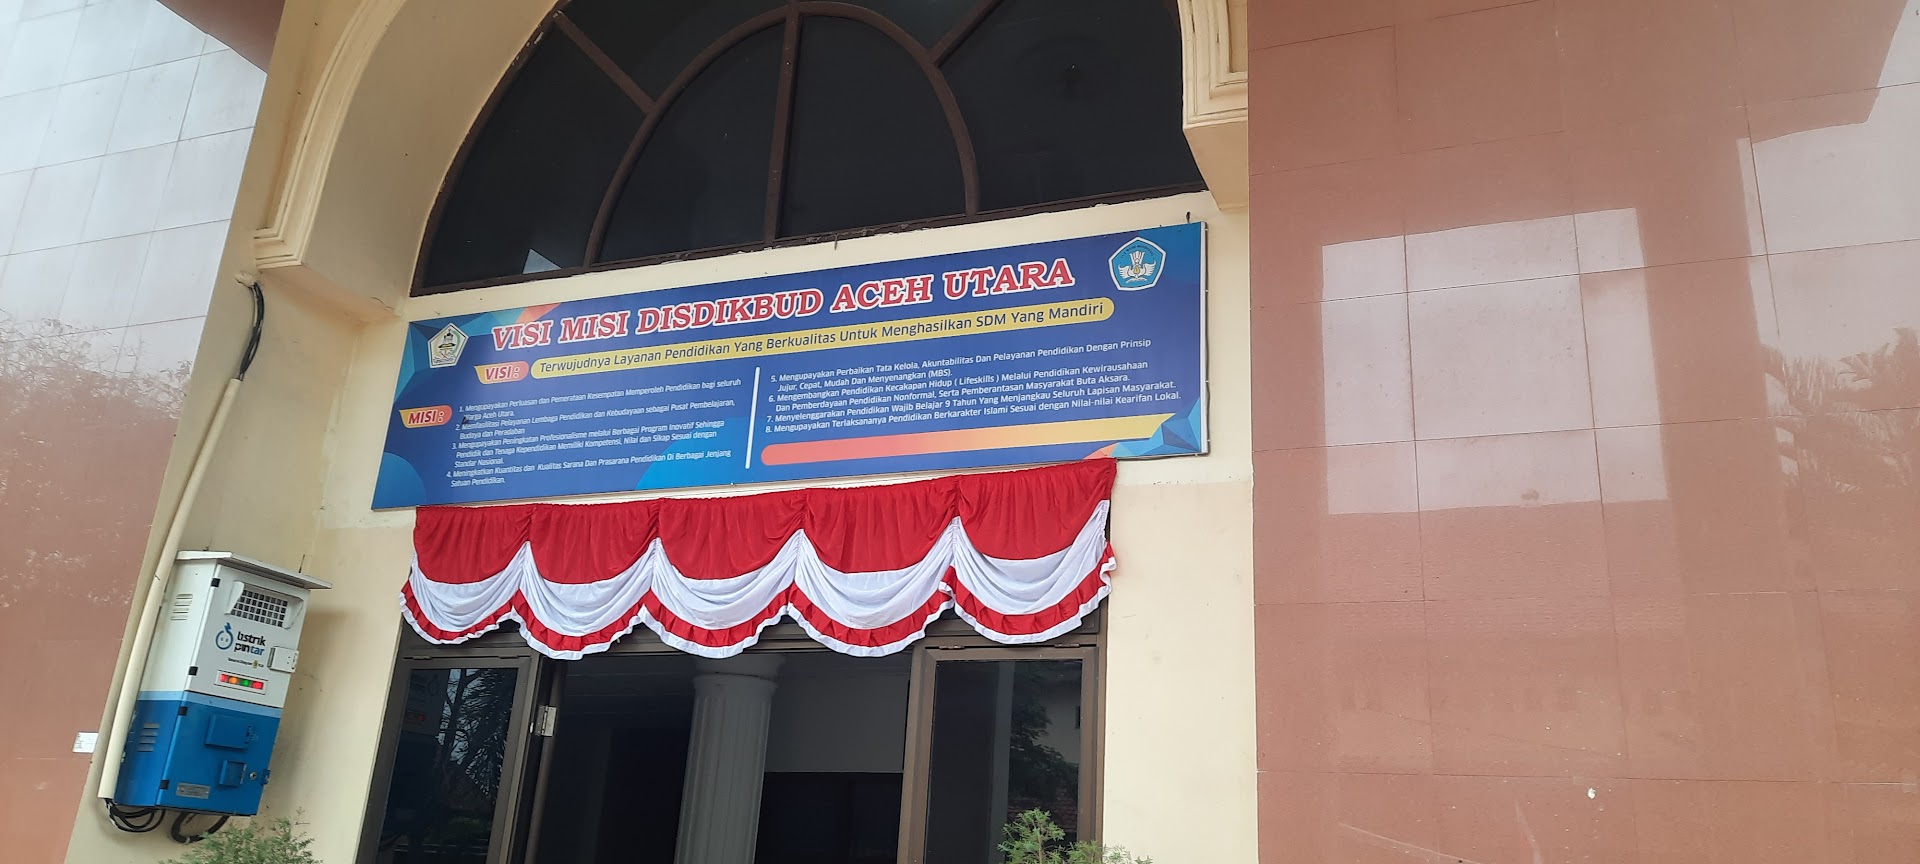 Gambar Dinas Pendidikan Dan Kebudayaan Kabupaten Aceh Utara